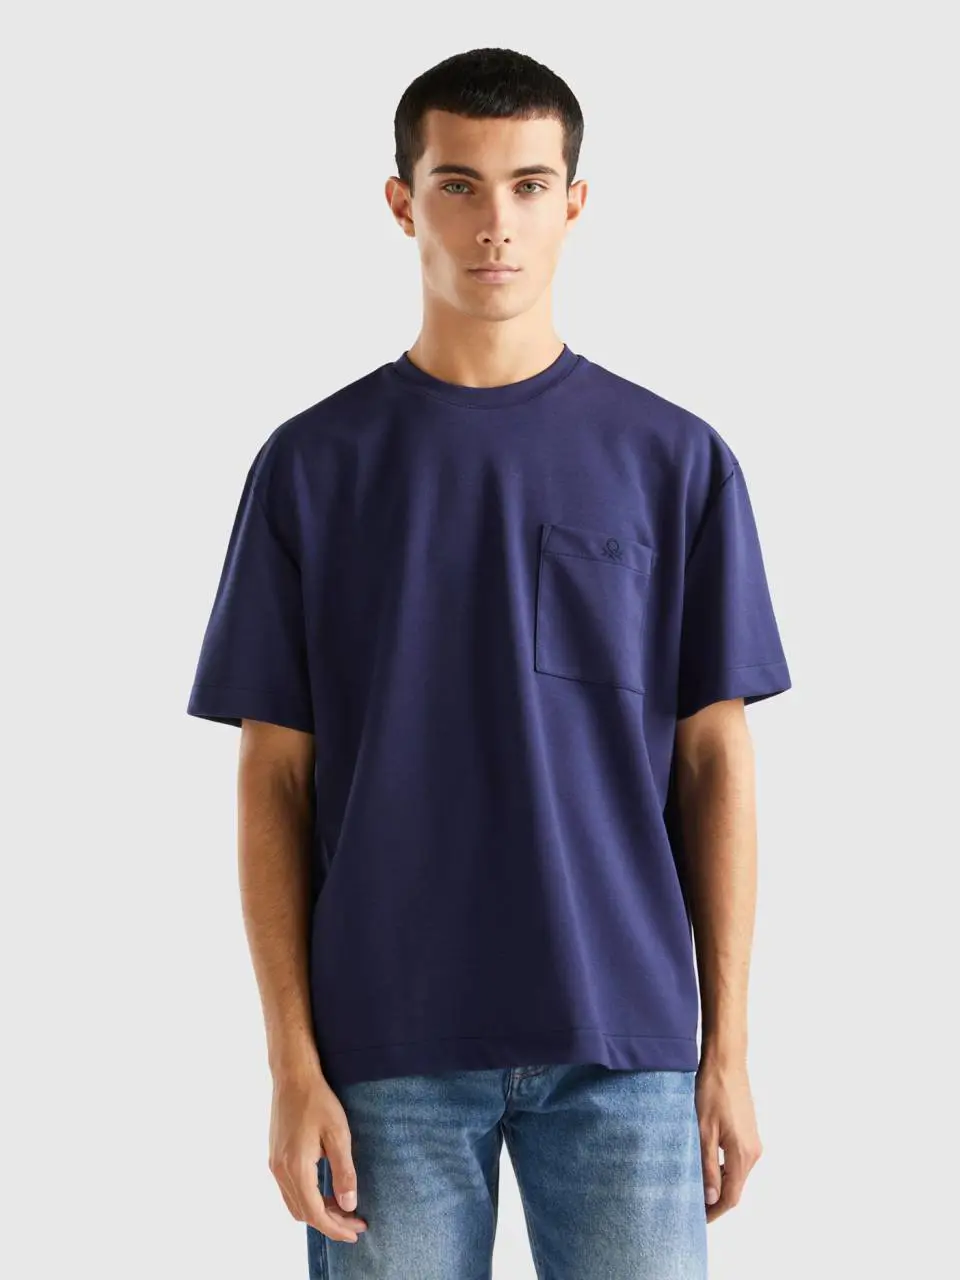 Benetton oversized t-shirt with pocket. 1